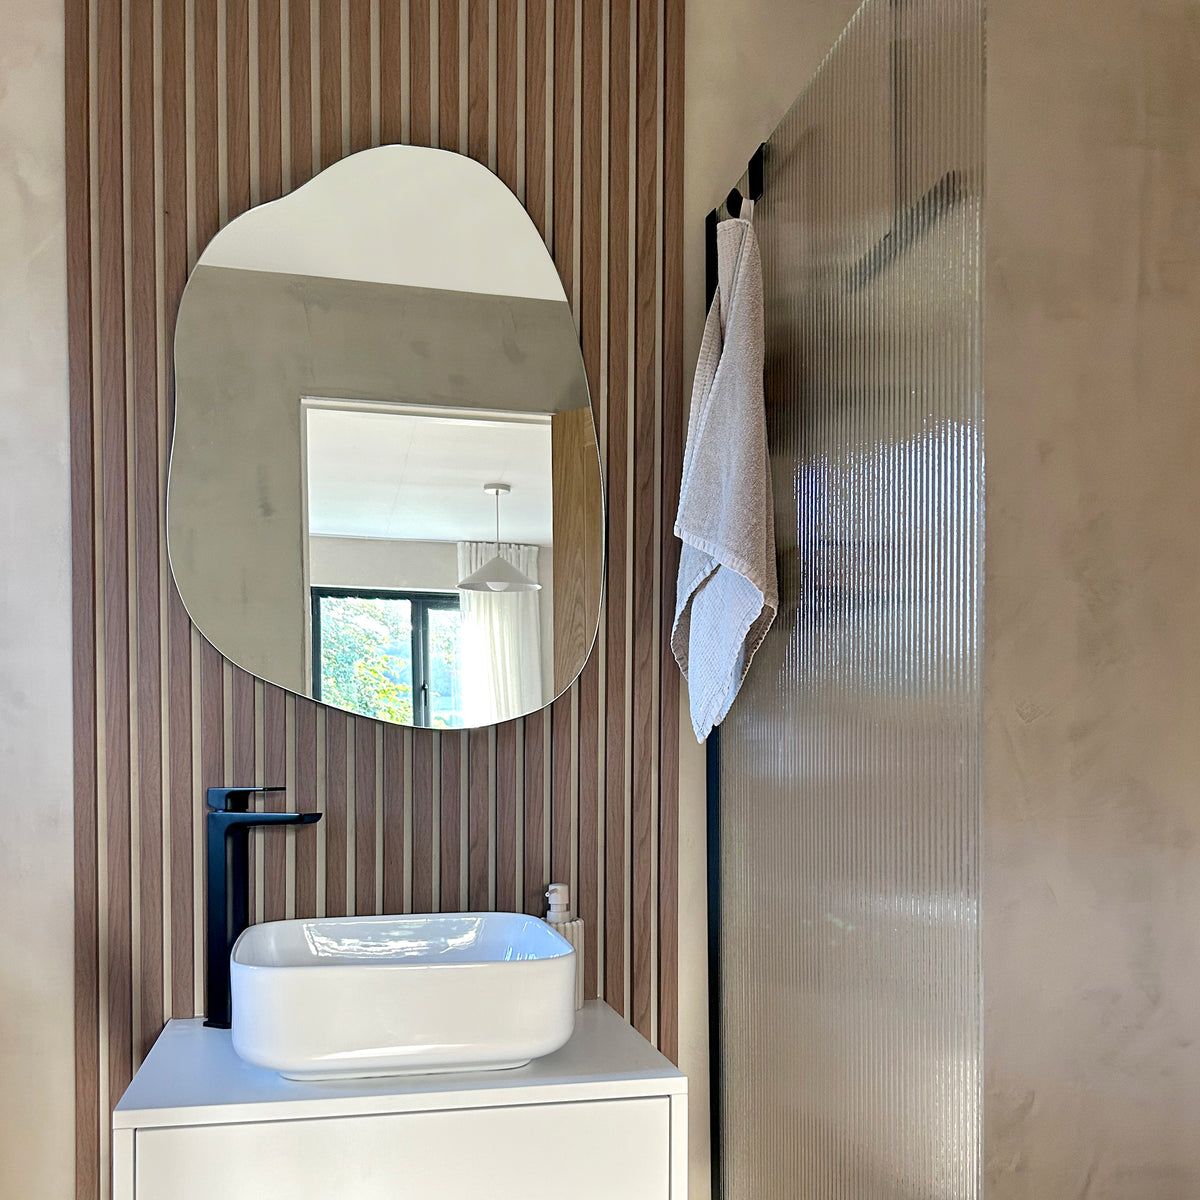 Small Frameless Pond Mirror as bathroom mirror